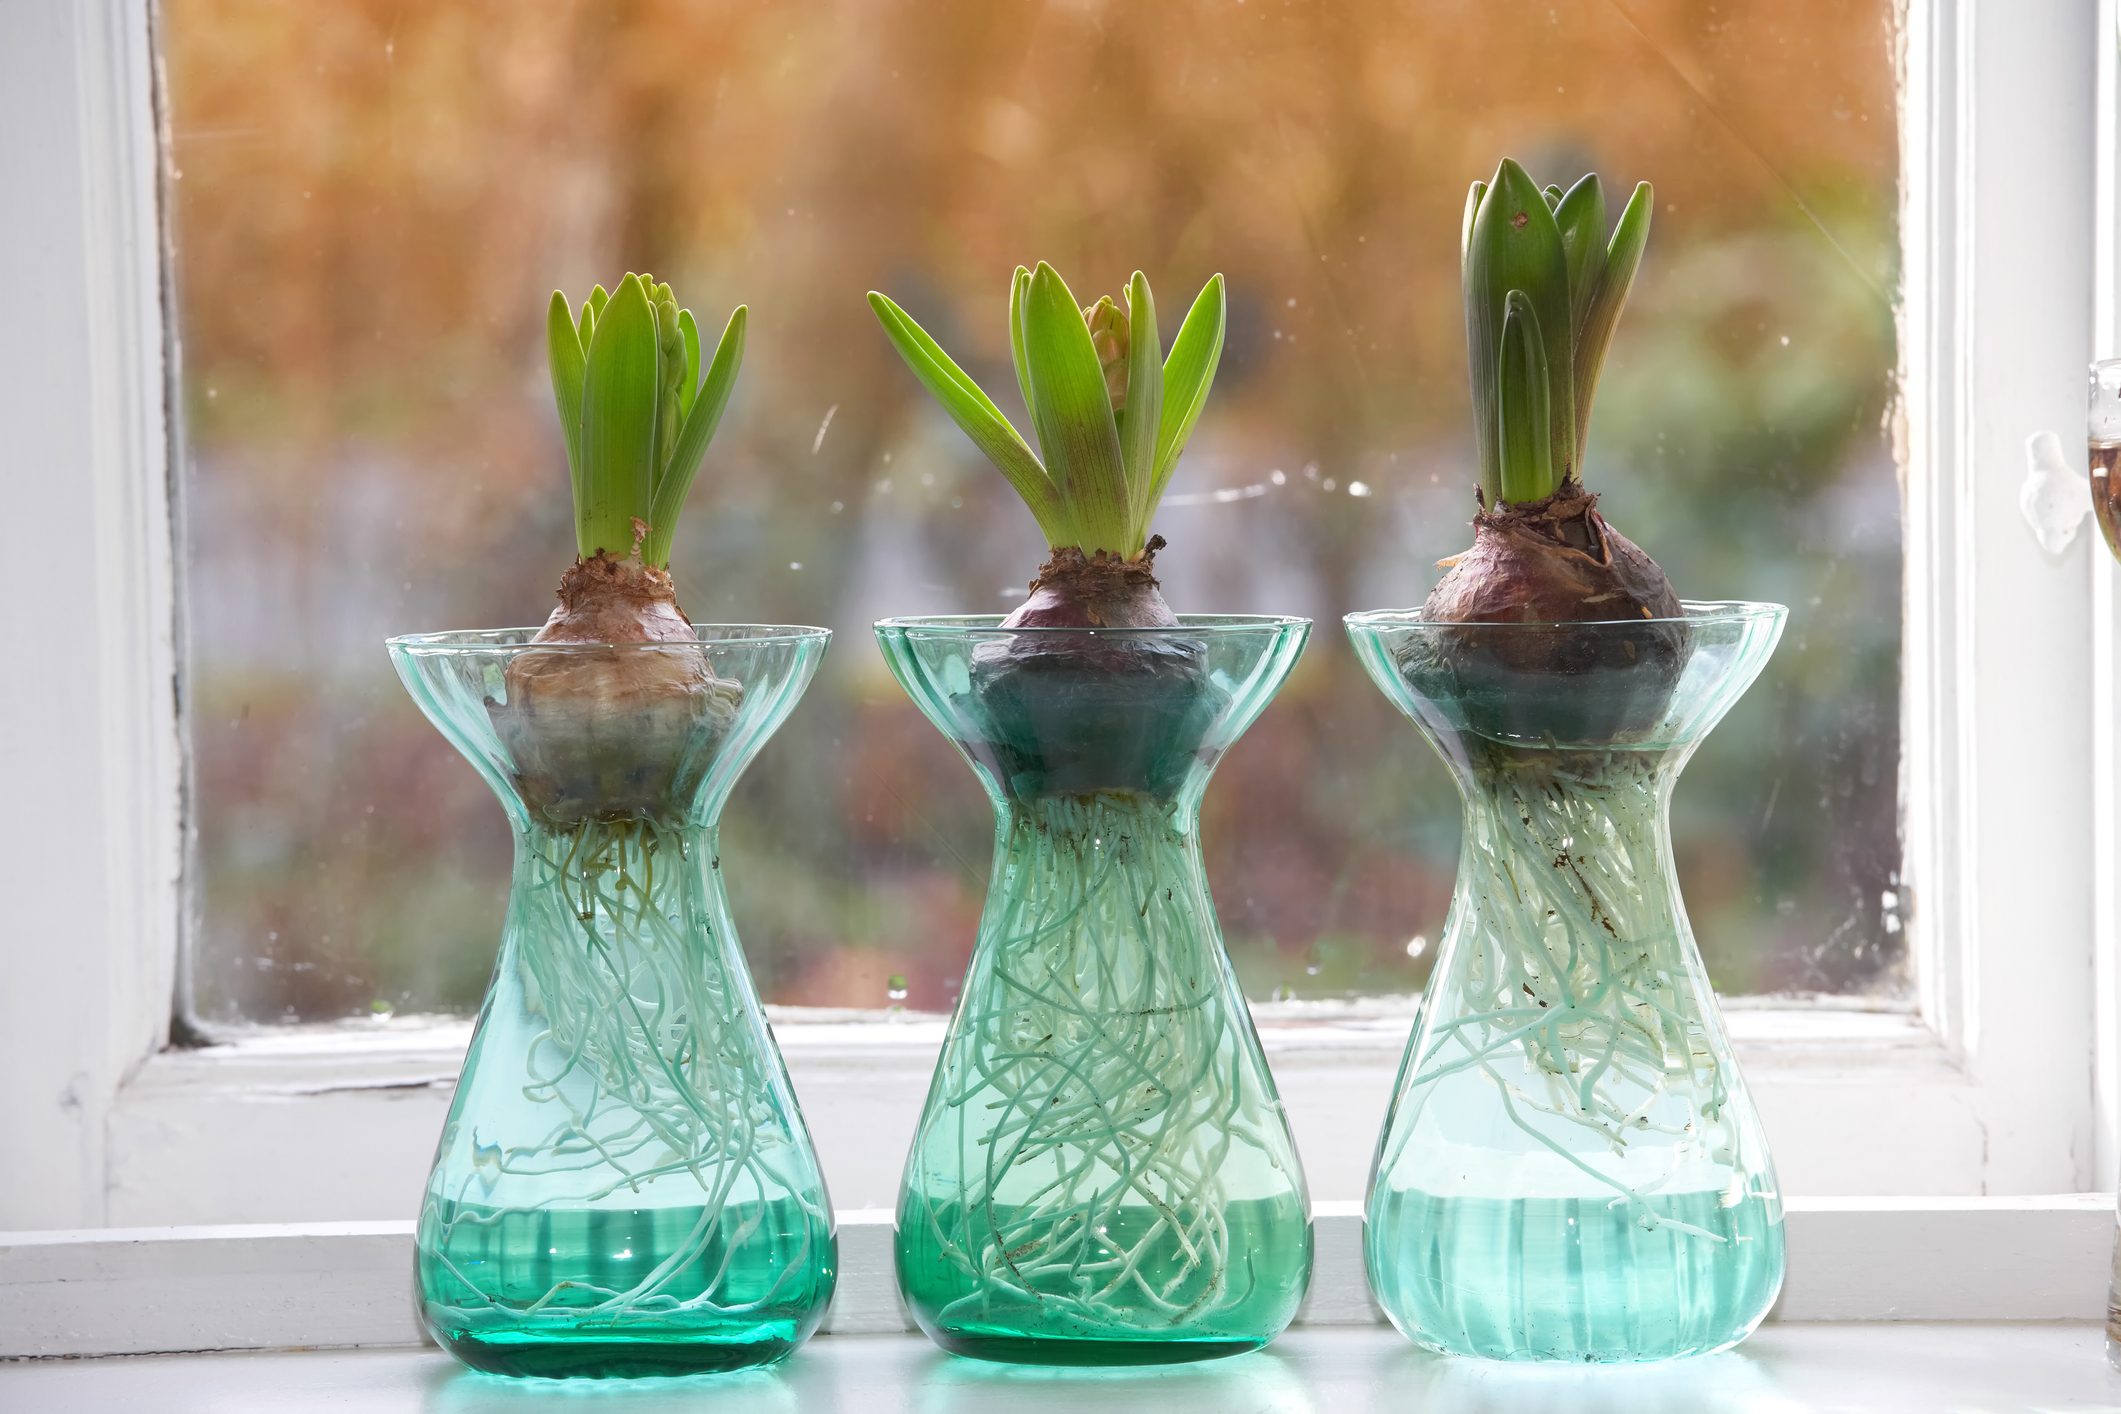 Growth of Hyacinth bulbs